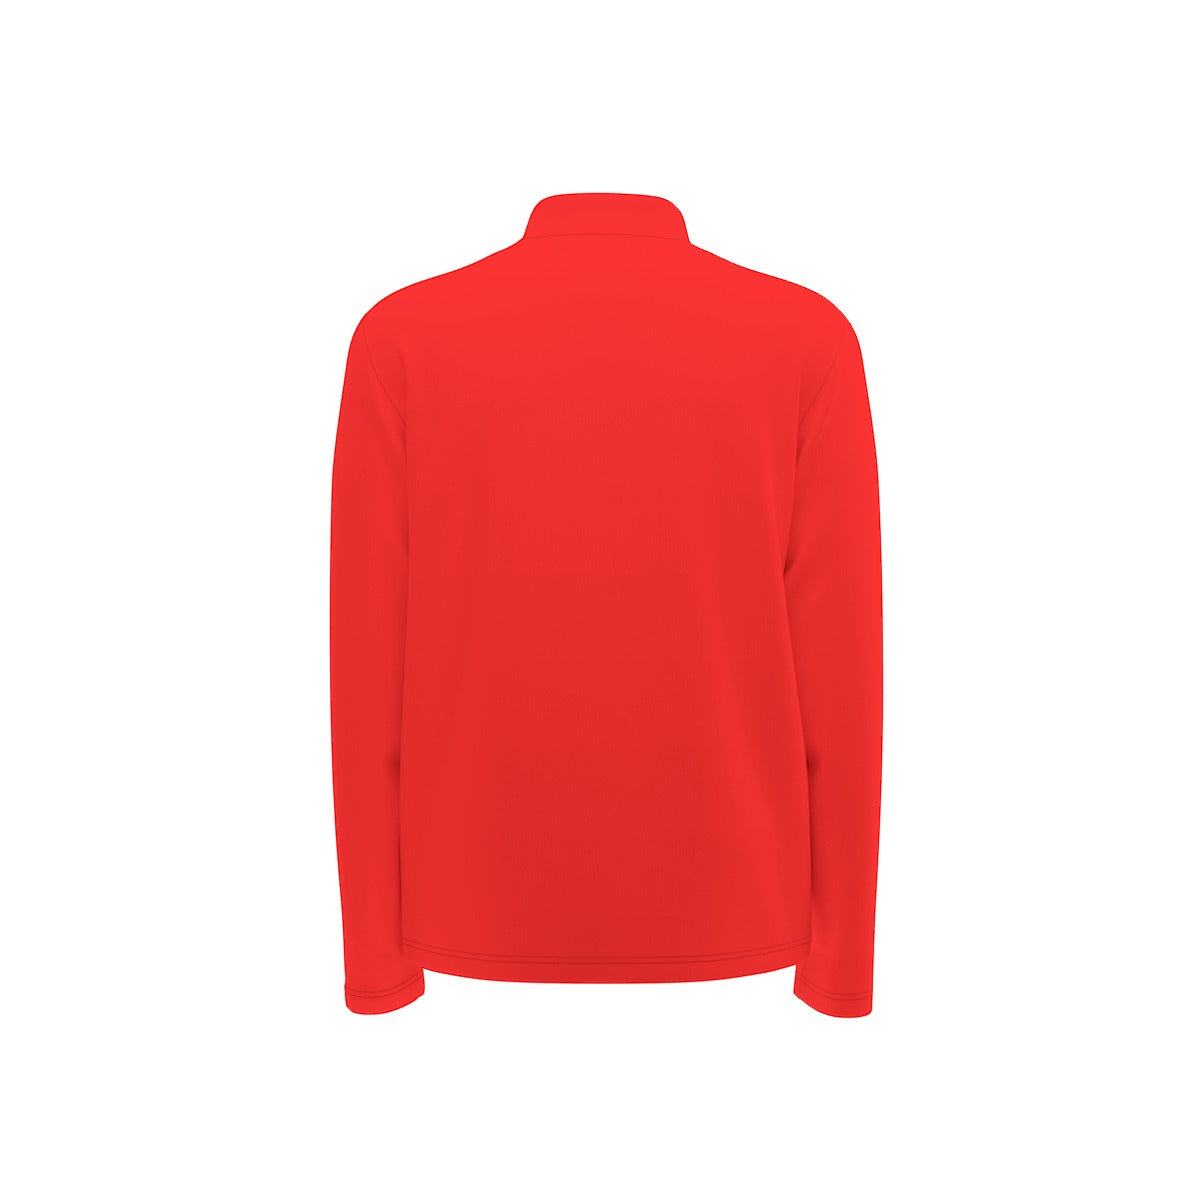 Teen - Plus Size Tuck&Simon Red Half-Zip Pullover